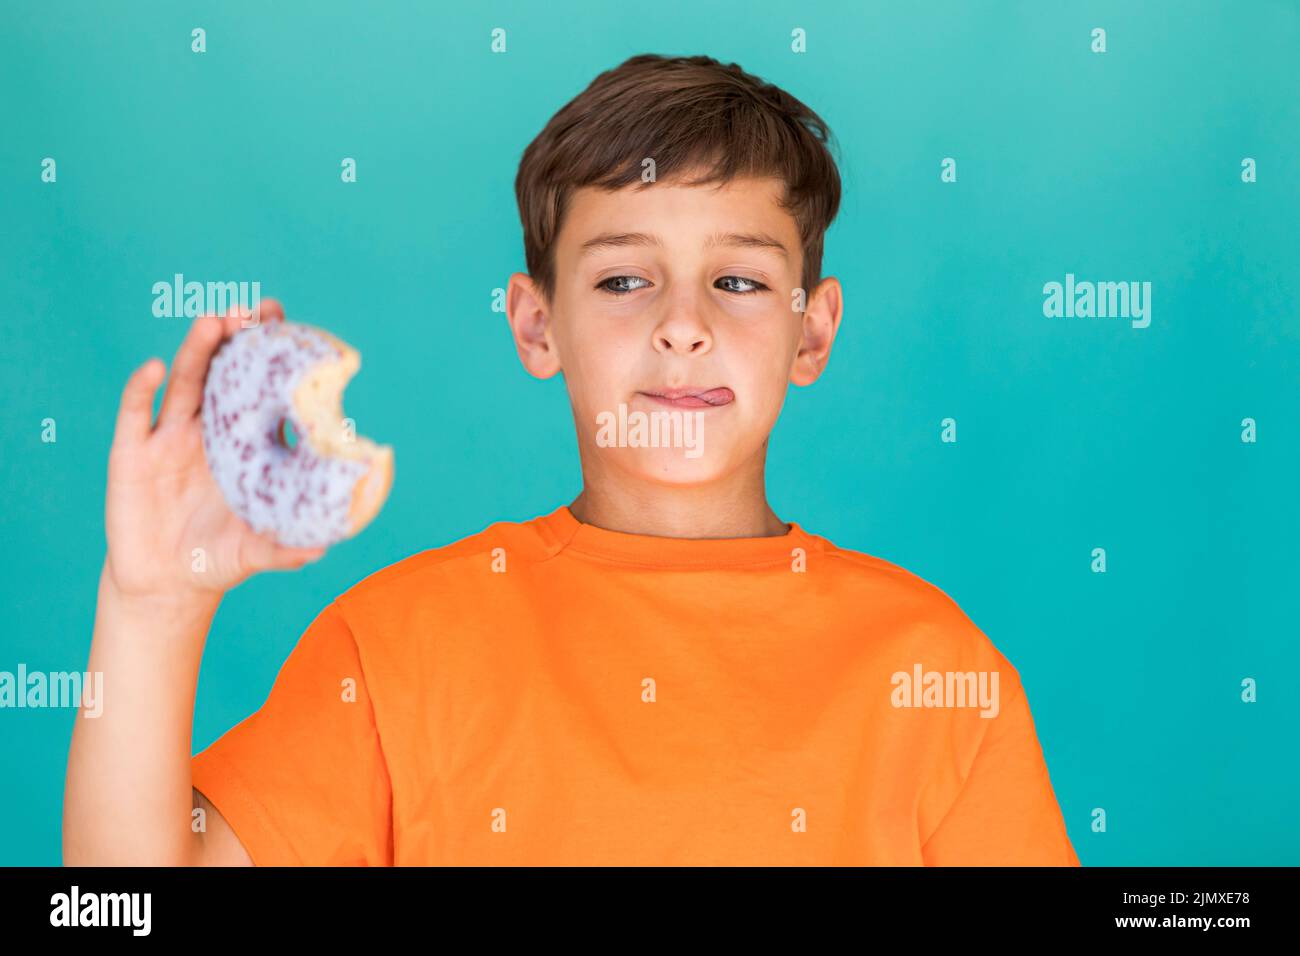 Boy looking delicious glazed doughnut Stock Photo